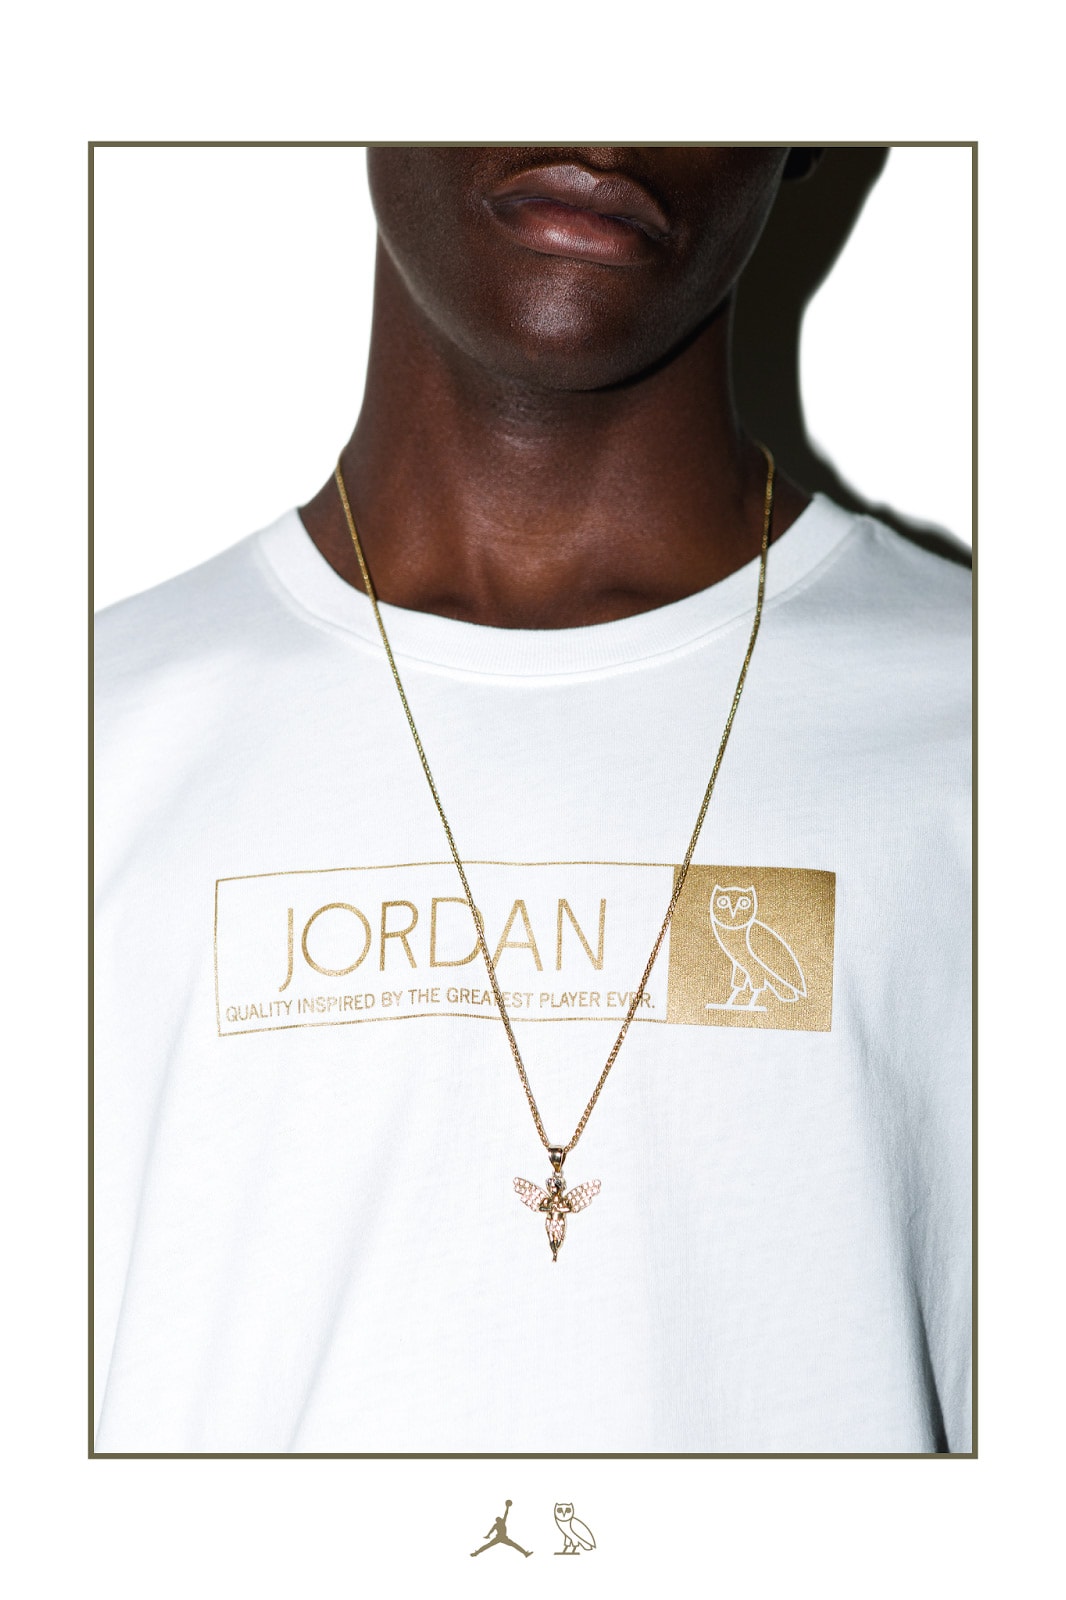 OVO Jordan Brand Lookbook